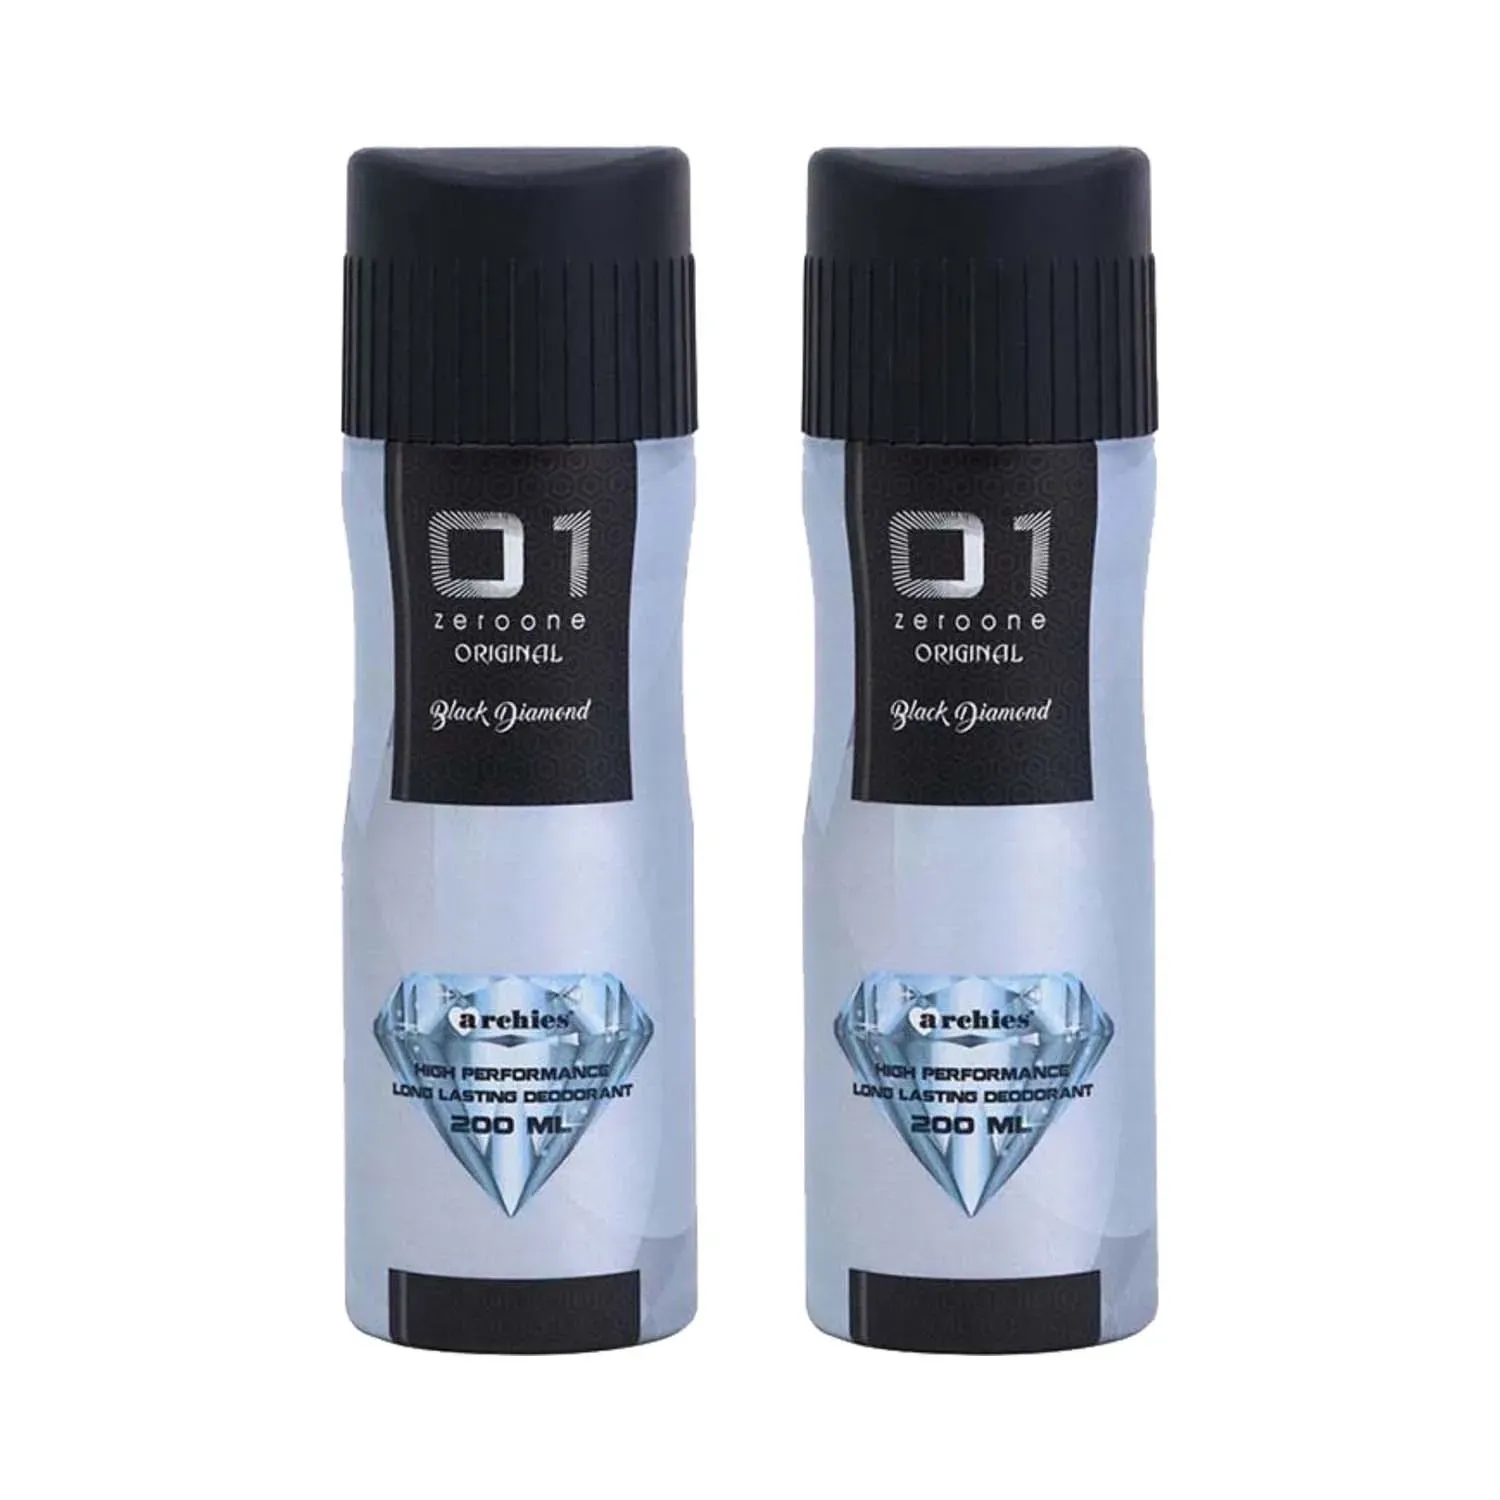 Archies Parfum | Archies Parfum 01 Original Black Diamond Deodorant Combo (2Pcs)